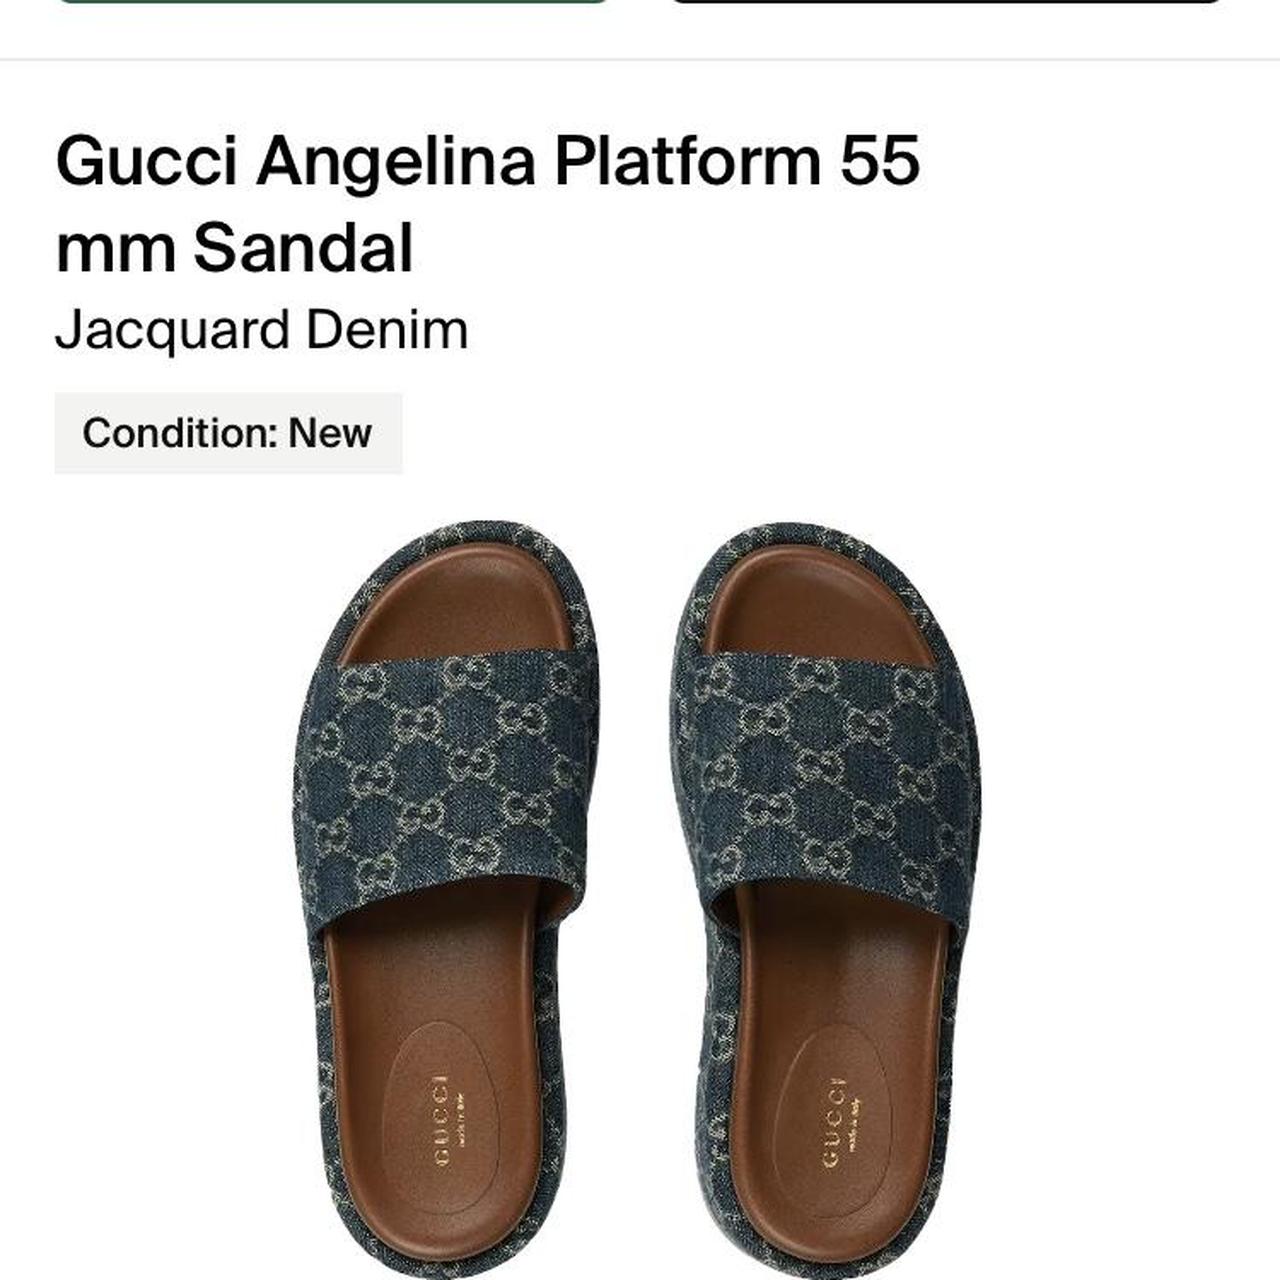 Gucci Angelina Platform 55 mm Sandal Black Jacquard Denim